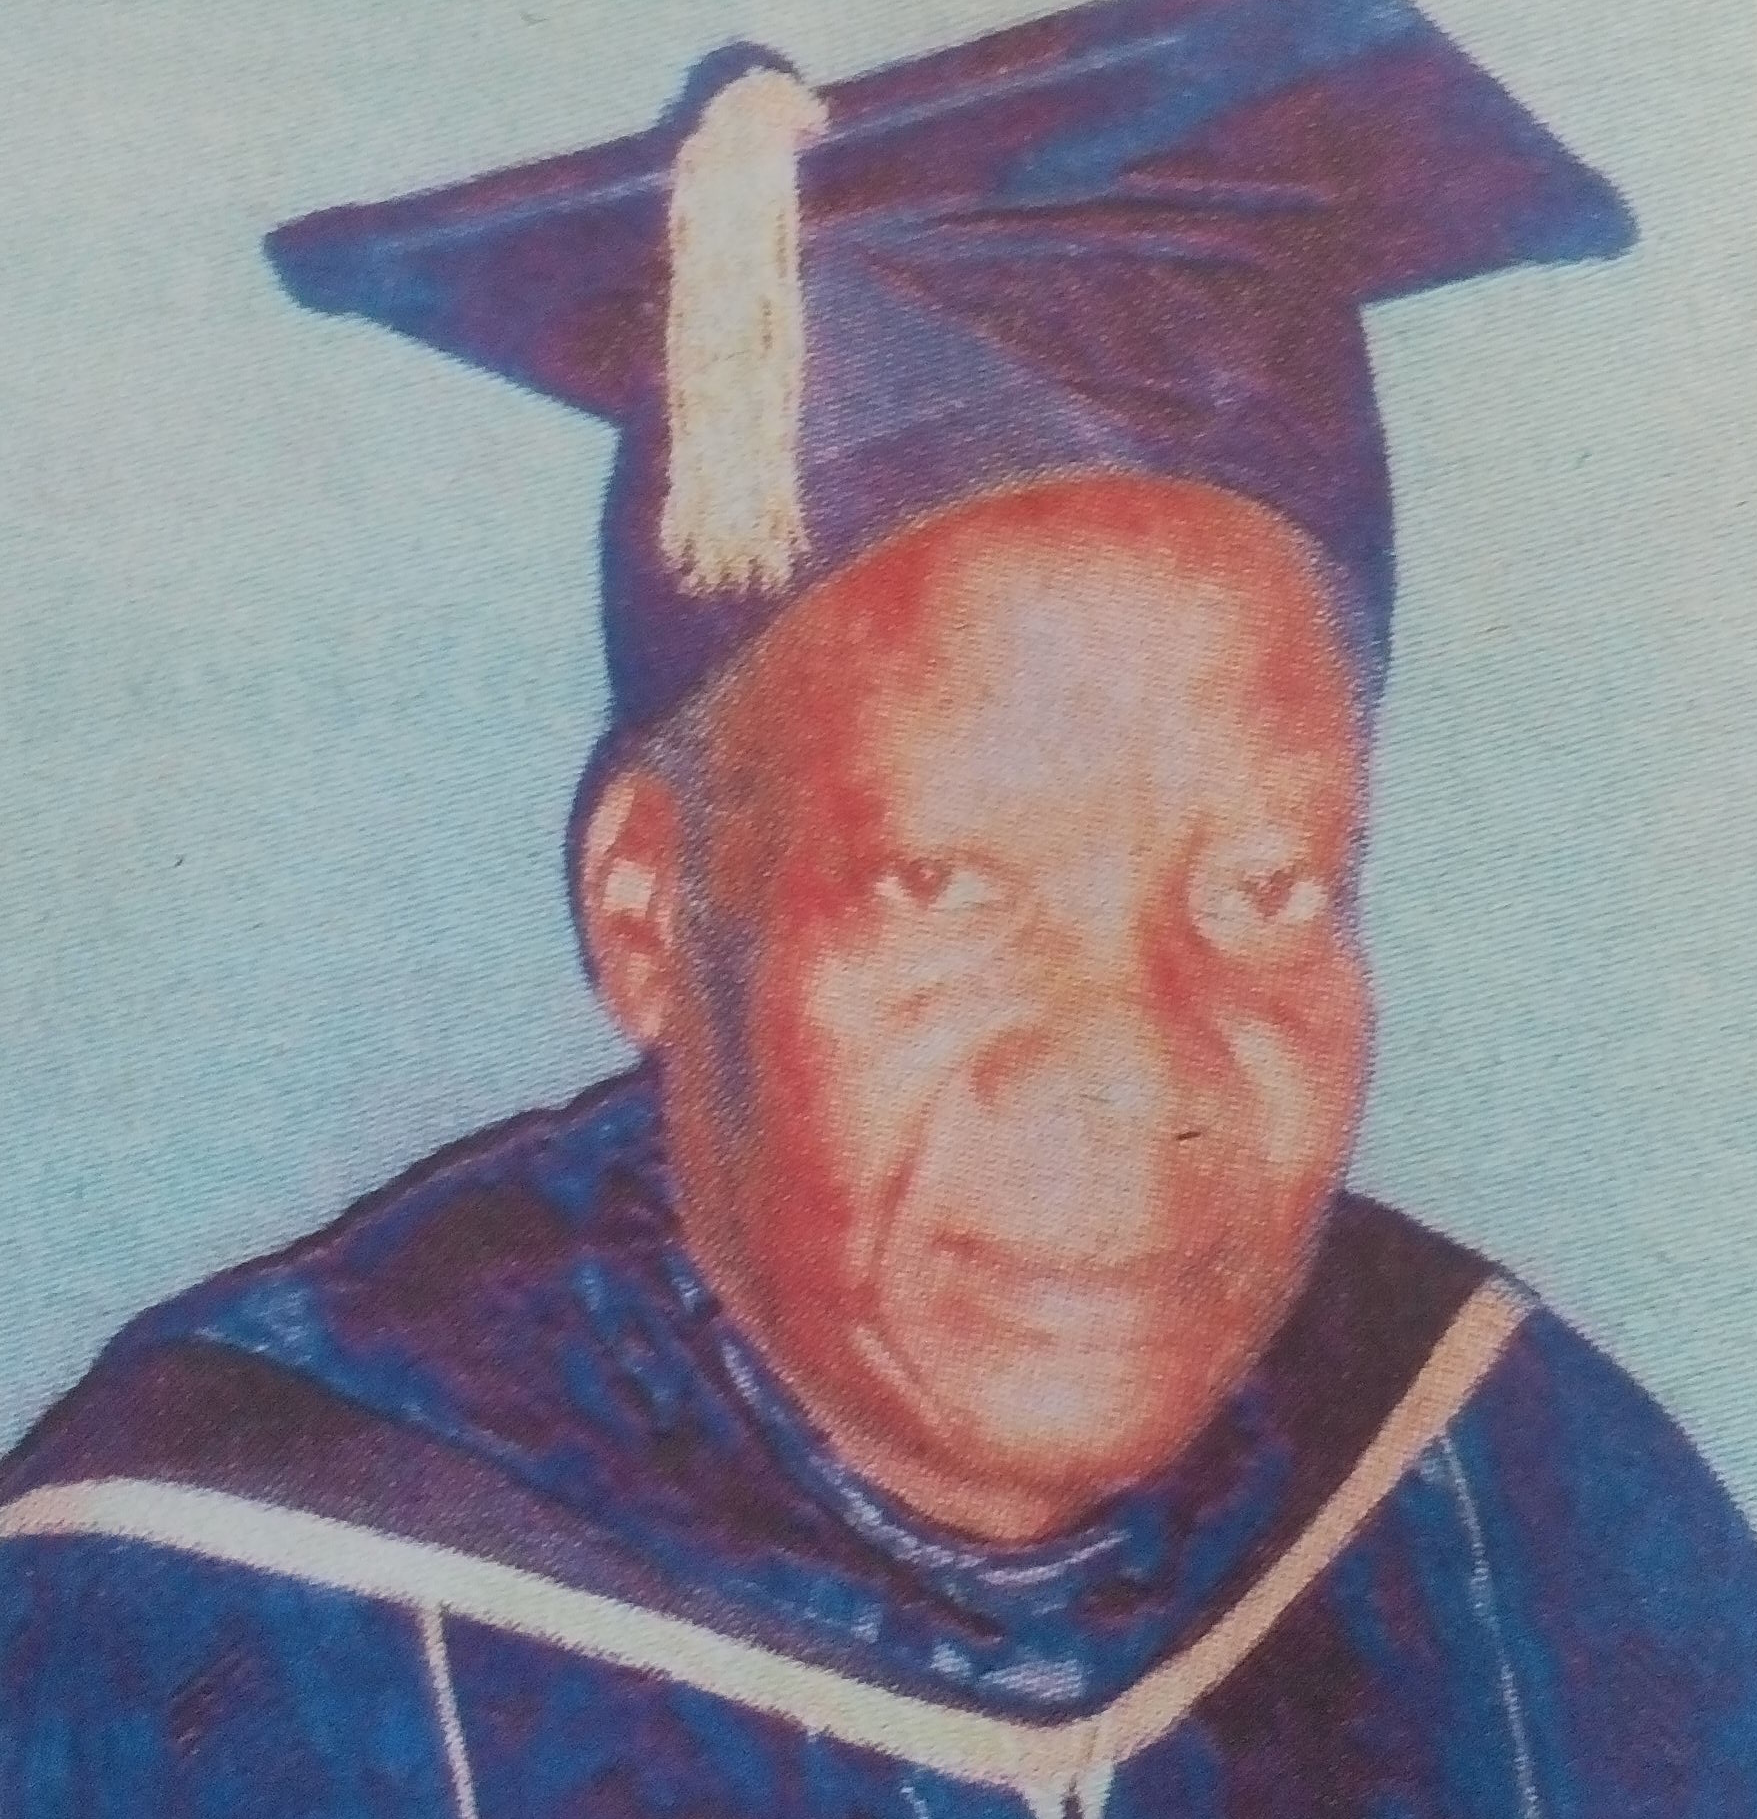 Obituary Image of Prof Joshua J. Akong’a